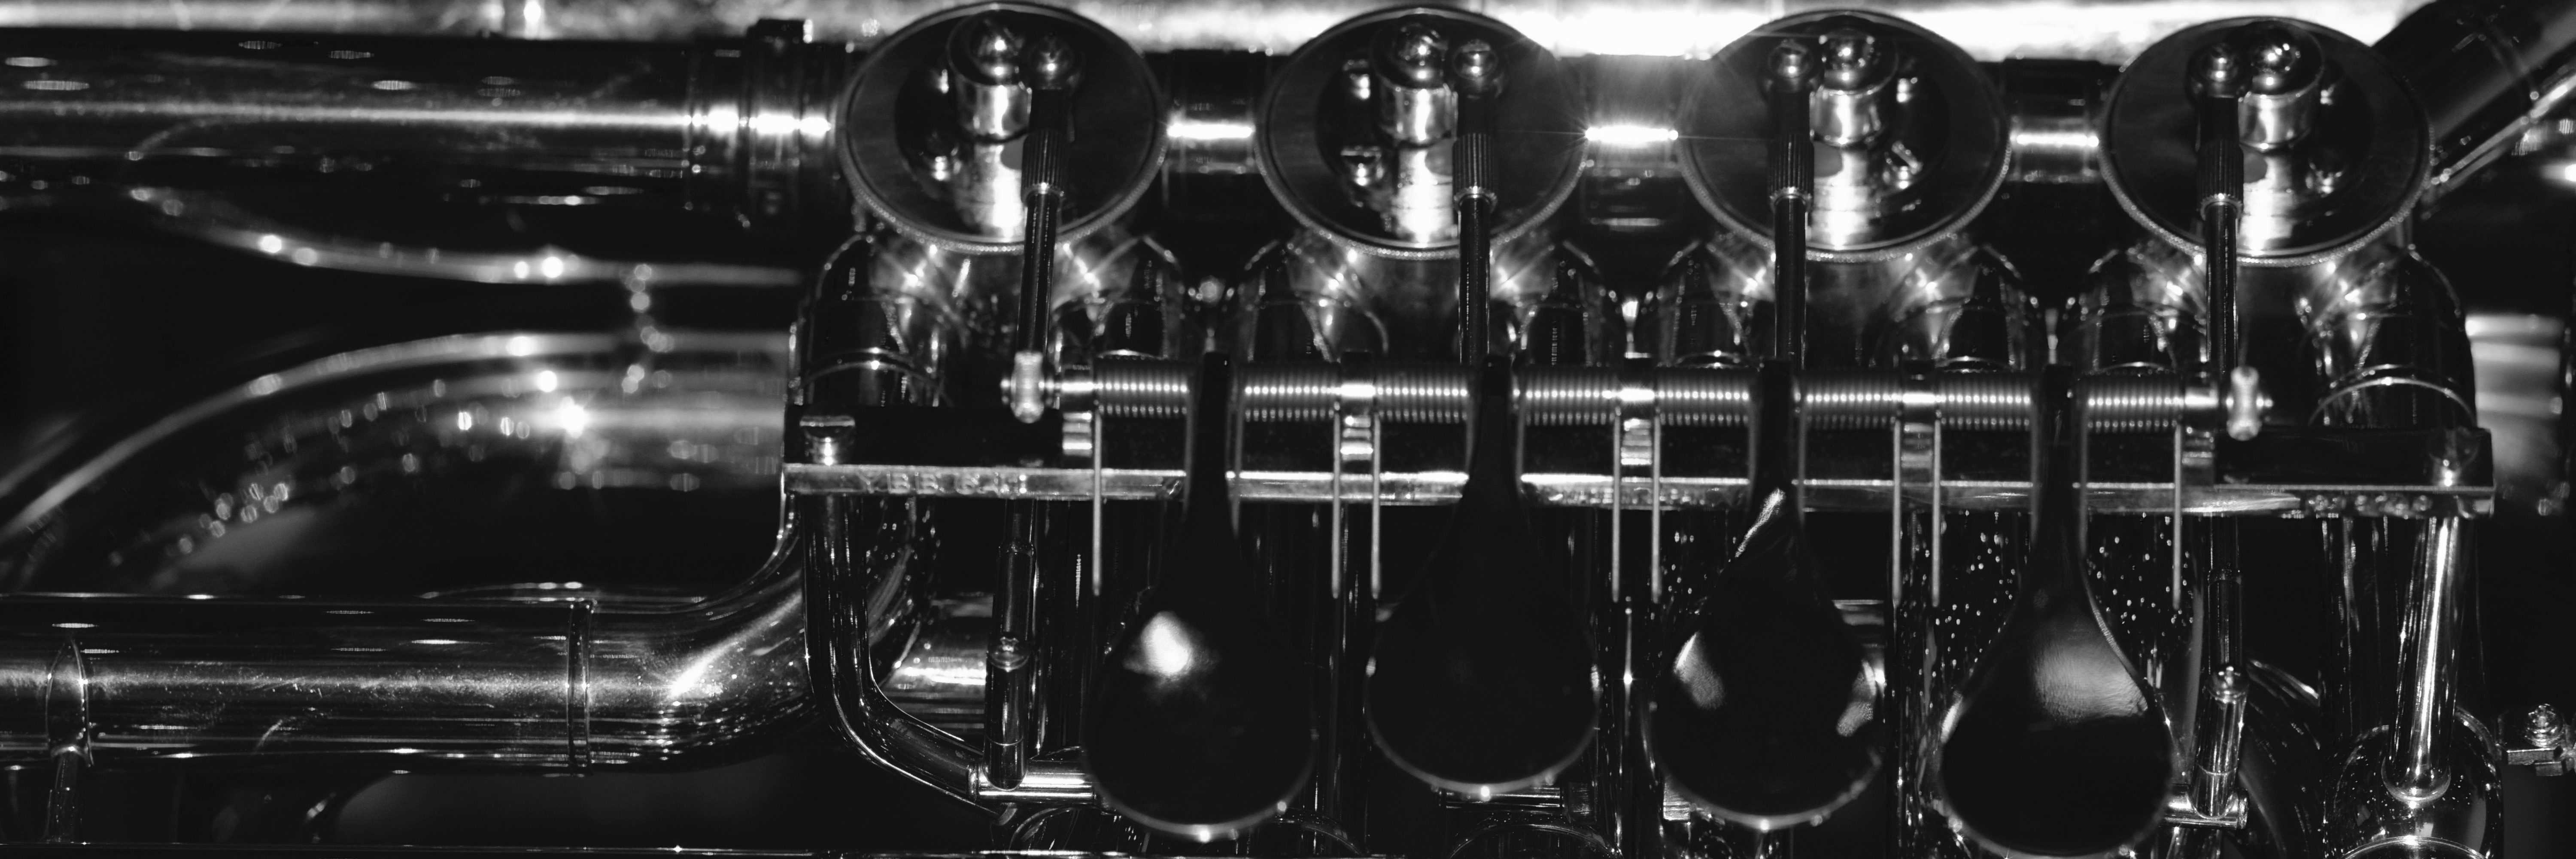 Image: Closeup of rotary tuba valves